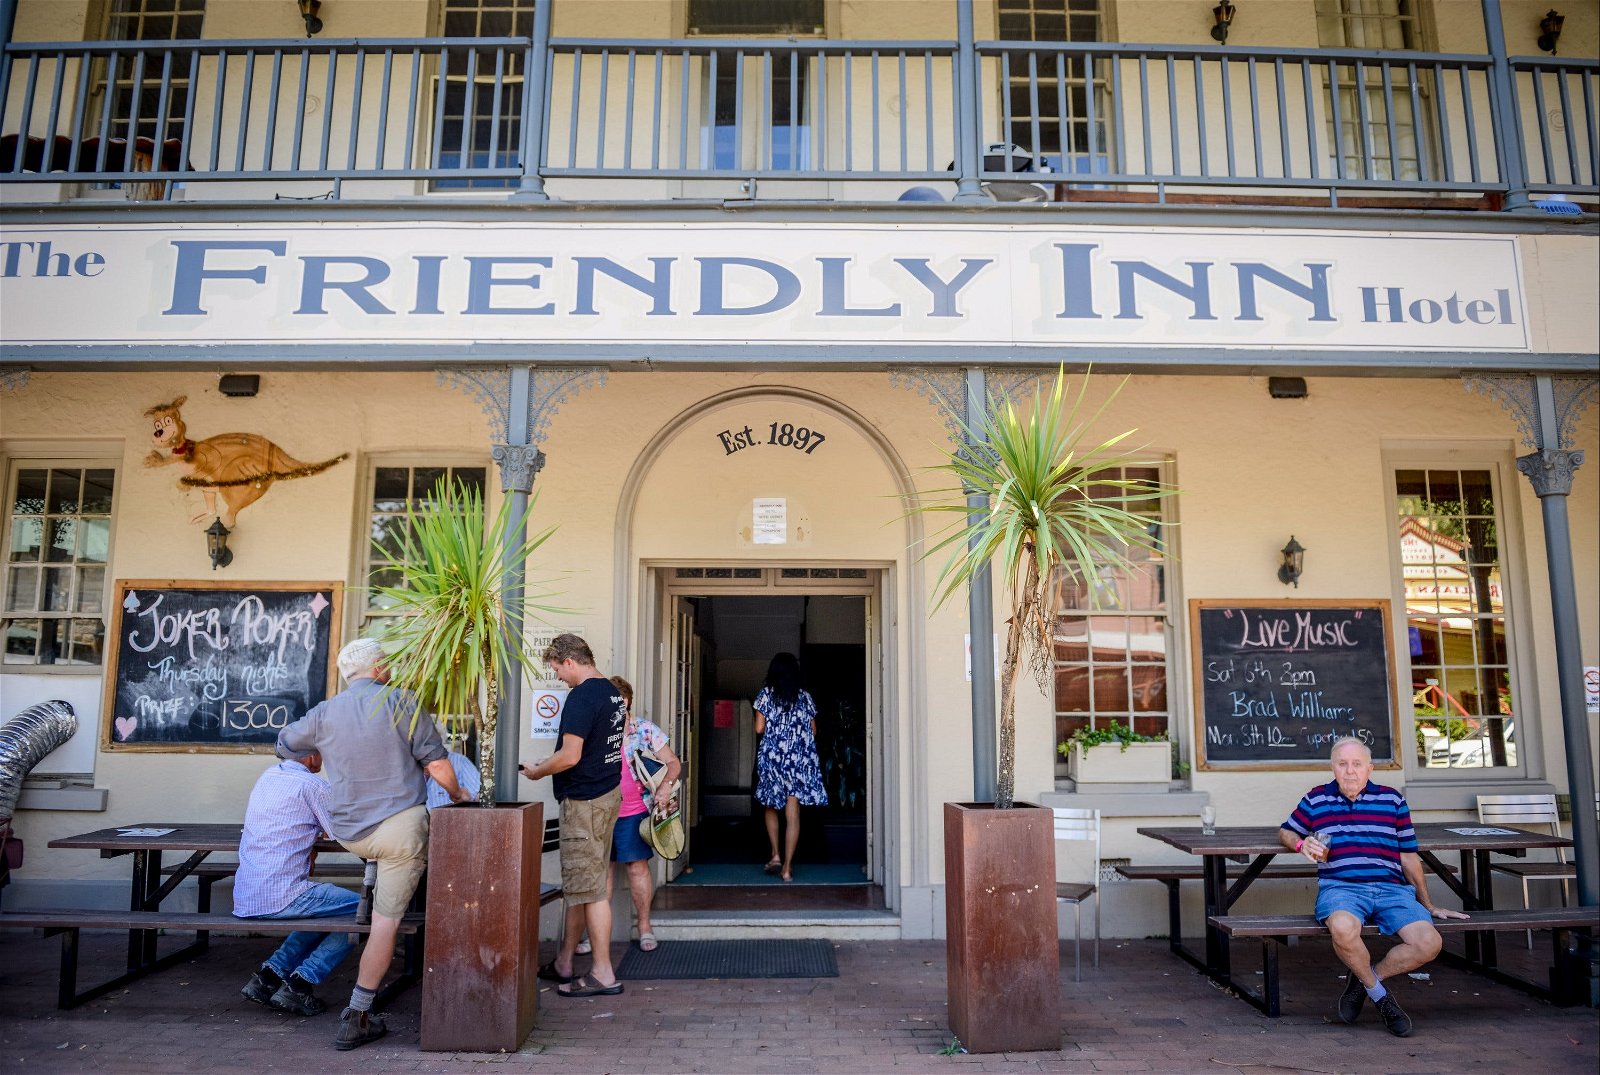 The Friendly Inn - Pubs Sydney